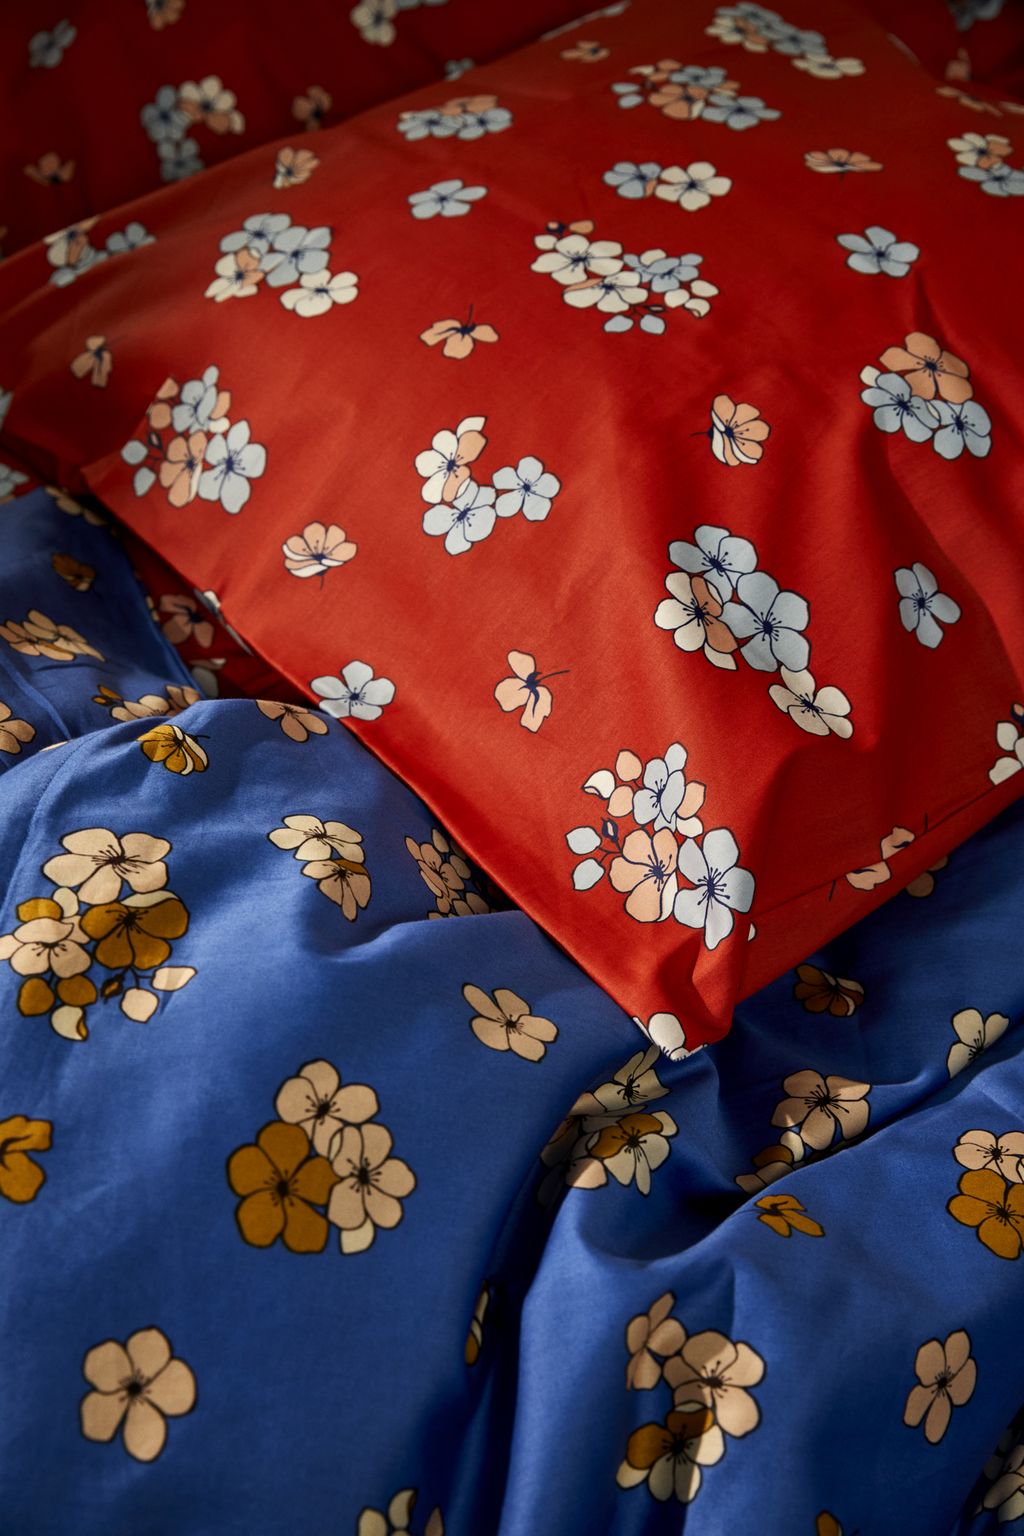 Juna Grand Pleasantly Bed Linen 140 X220 Cm, Blue